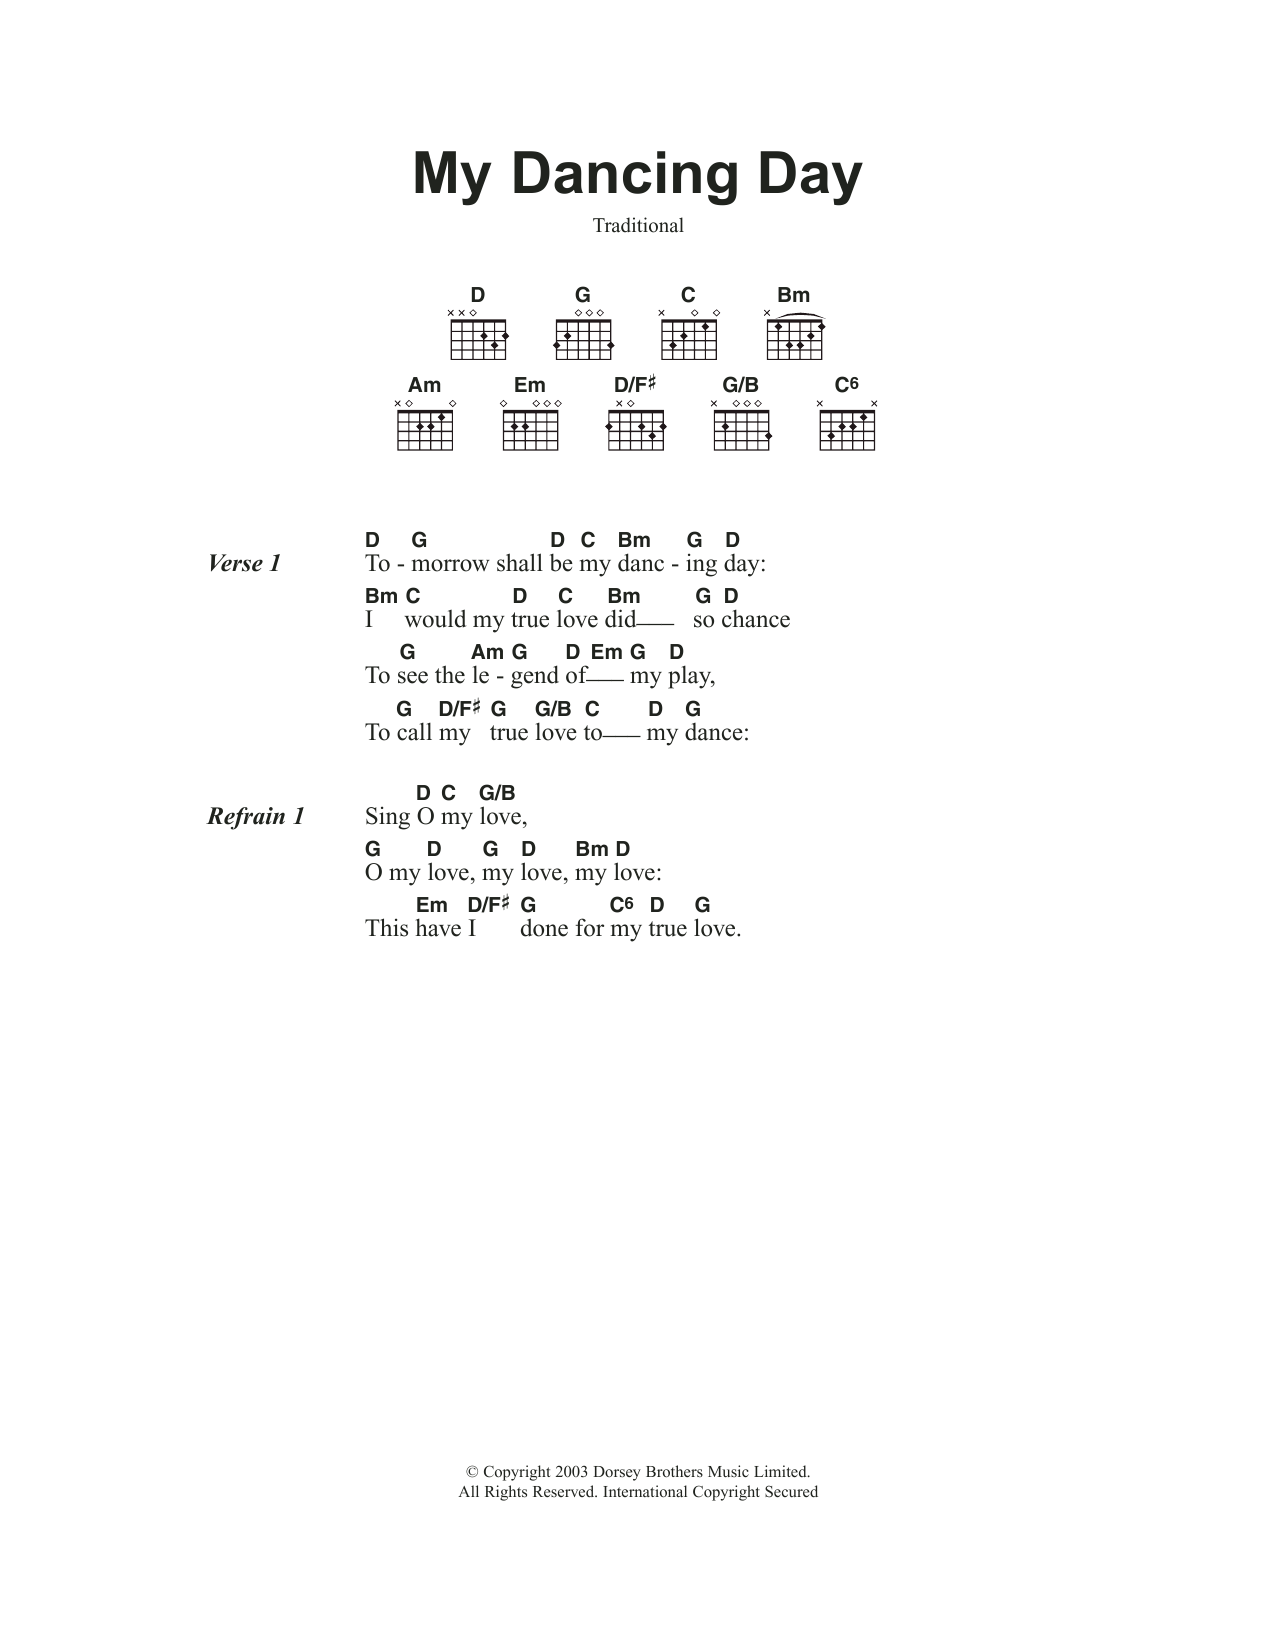 Traditional Carol My Dancing Day Sheet Music Notes & Chords for Guitar Chords/Lyrics - Download or Print PDF